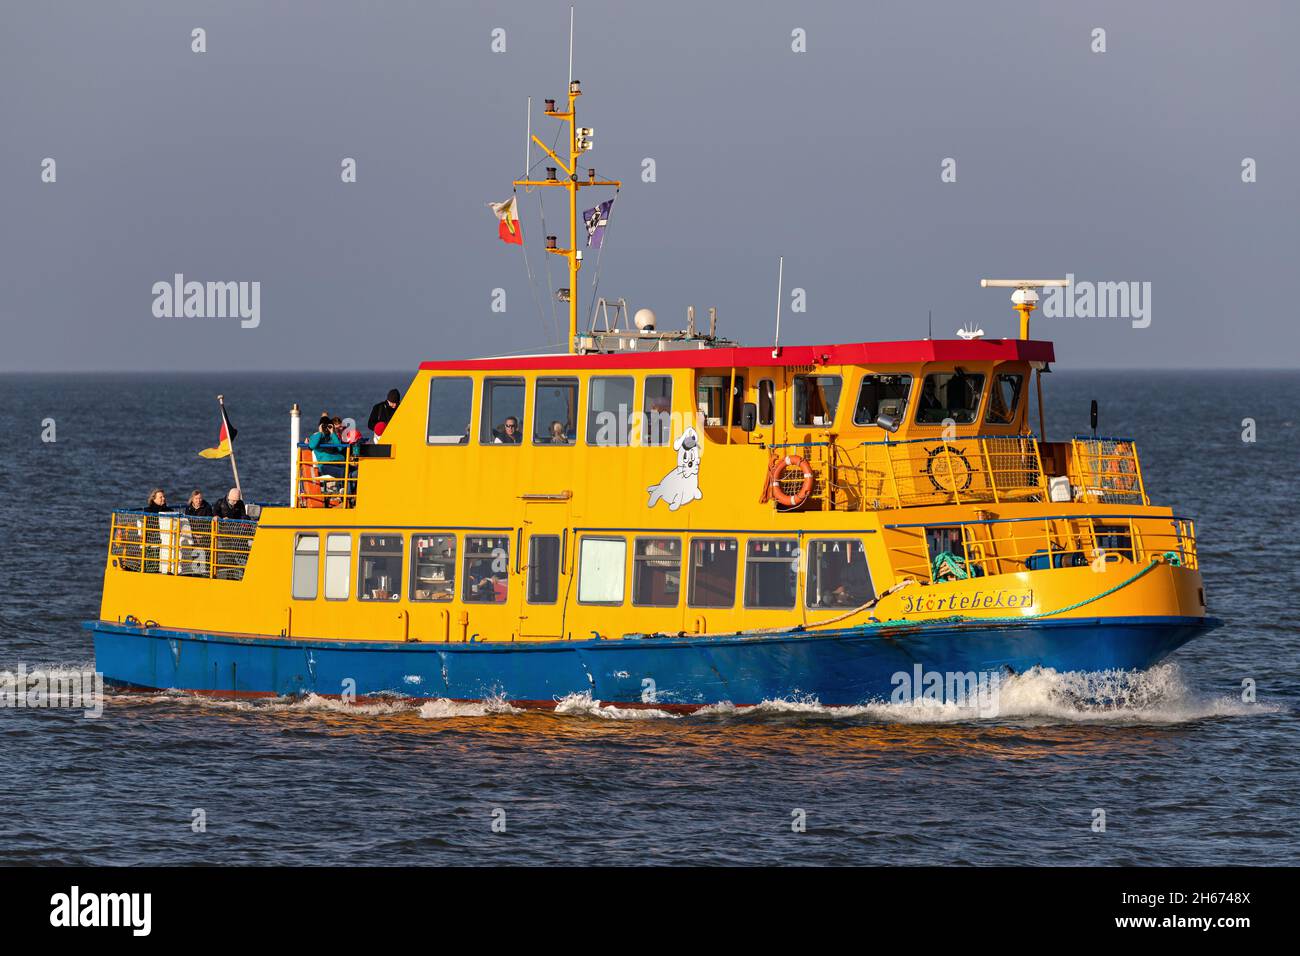 excursion boat STÖRTEBEKER on the river Elbe Stock Photo